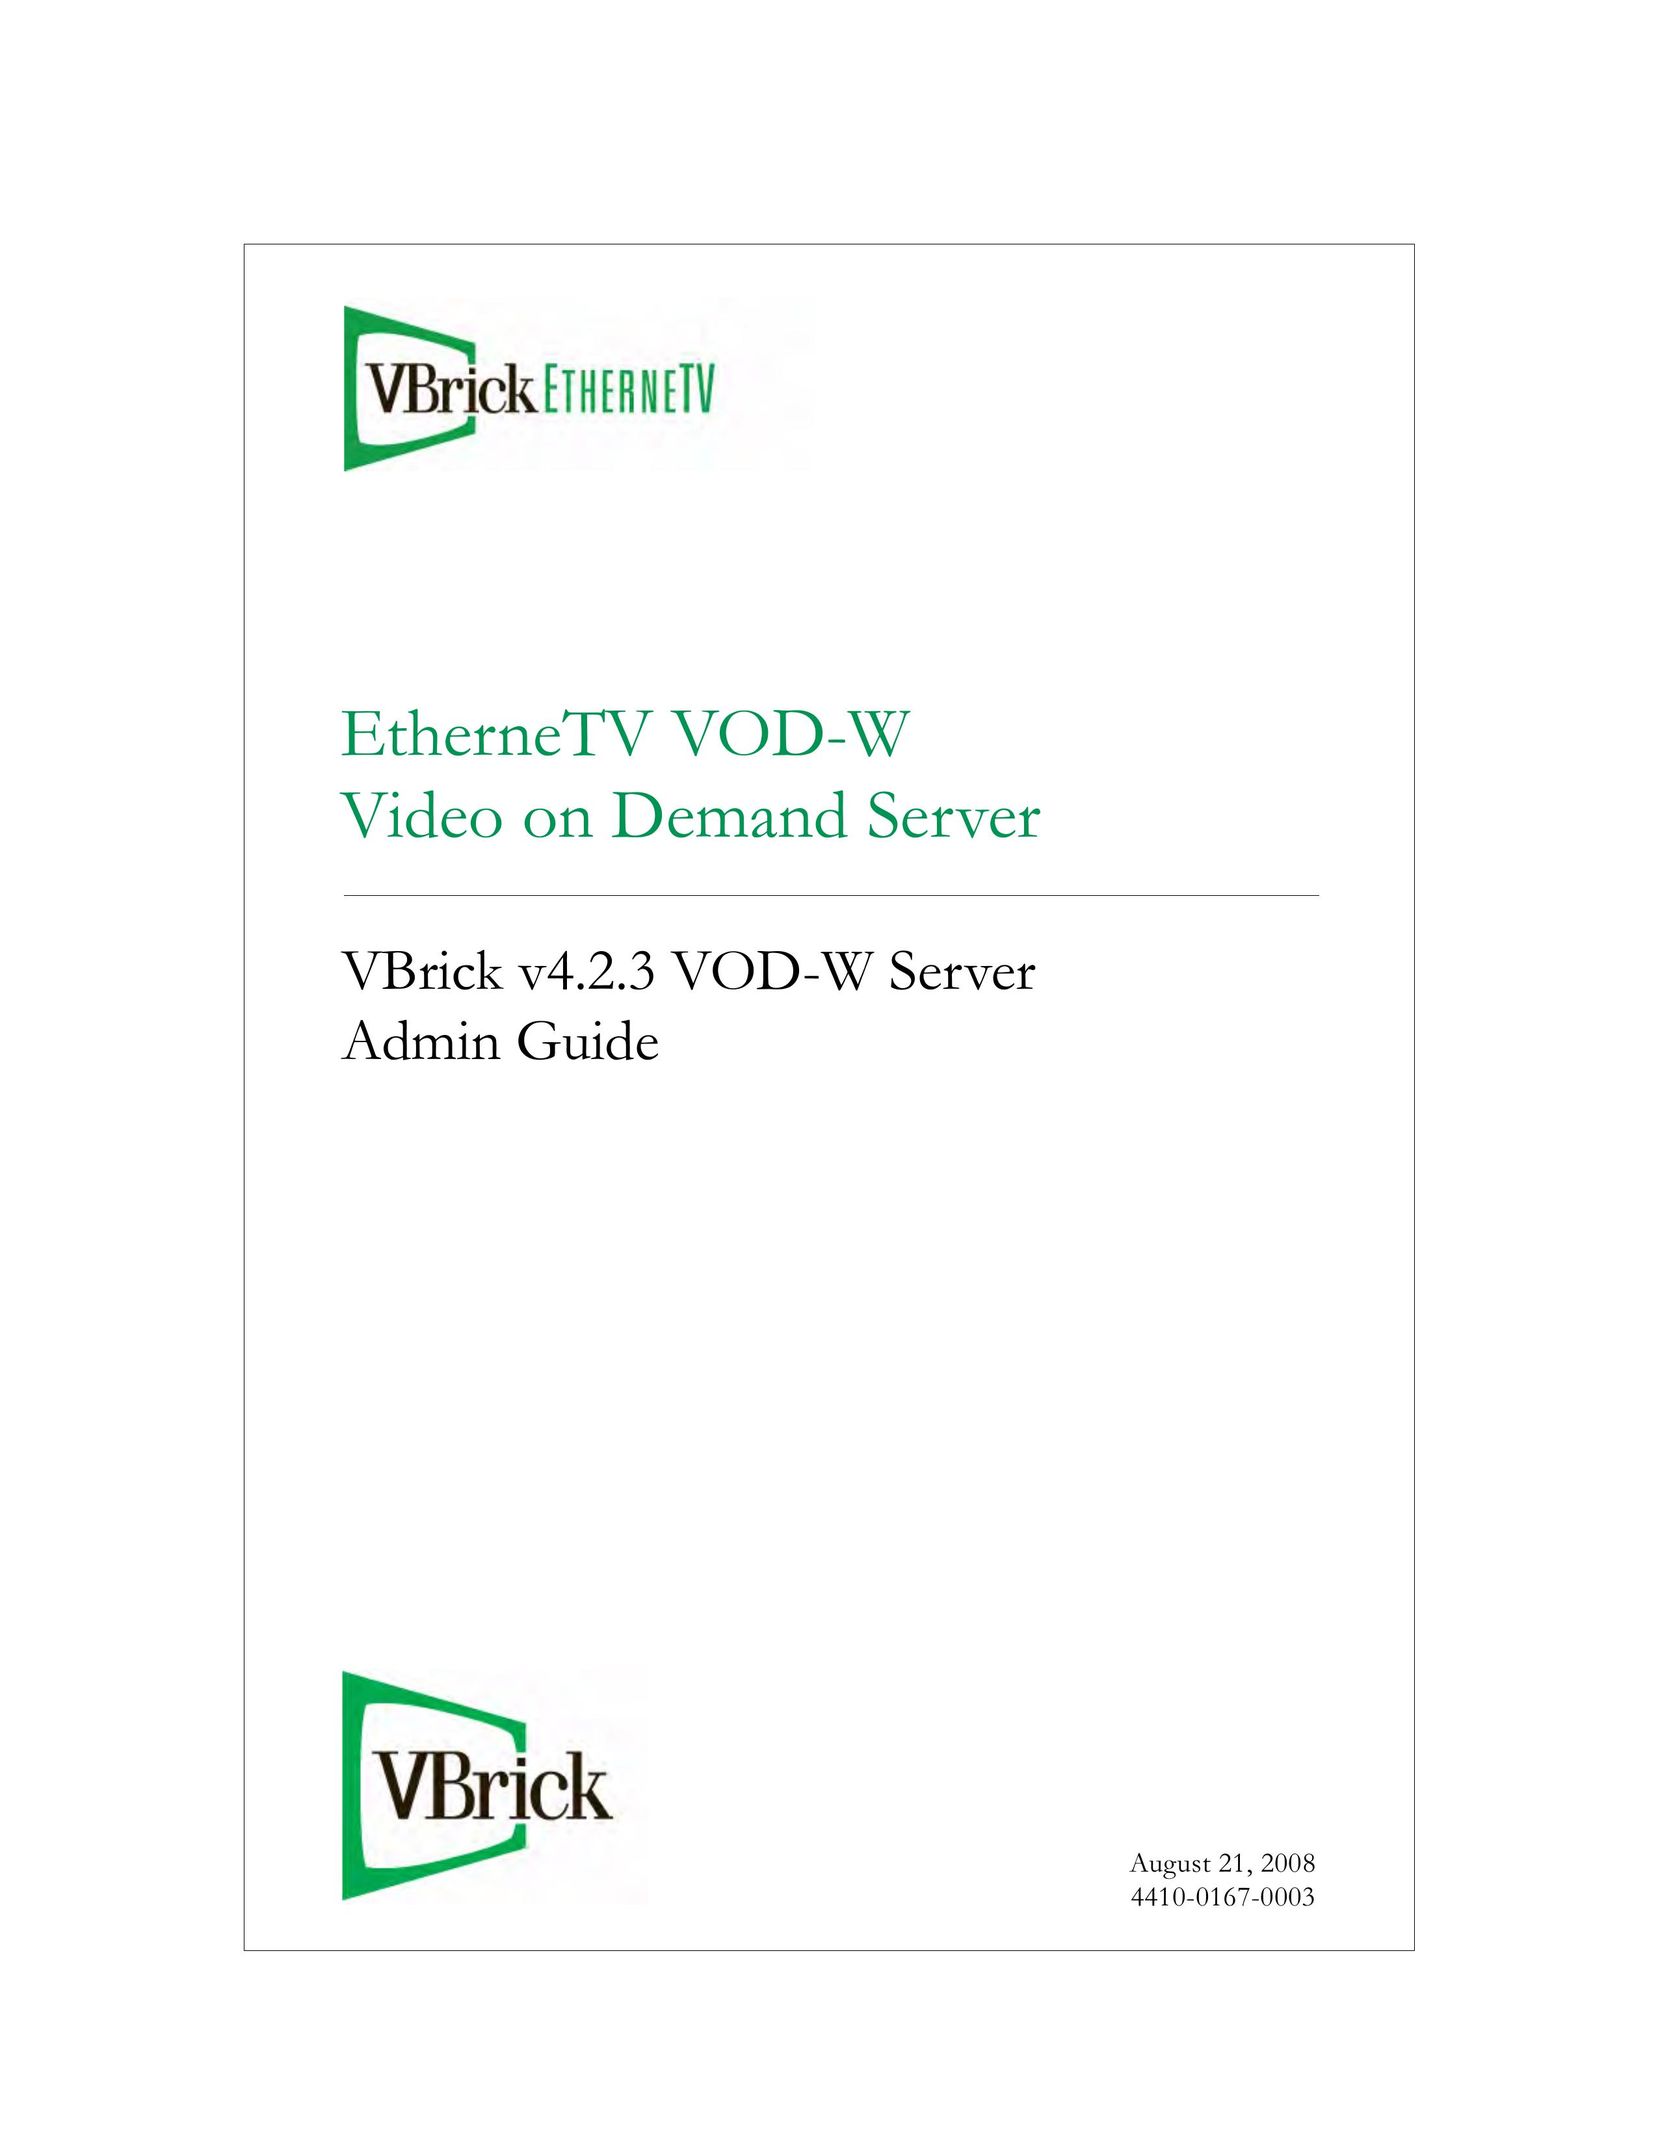 VBrick Systems VBrick v4.2.3 Network Card User Manual